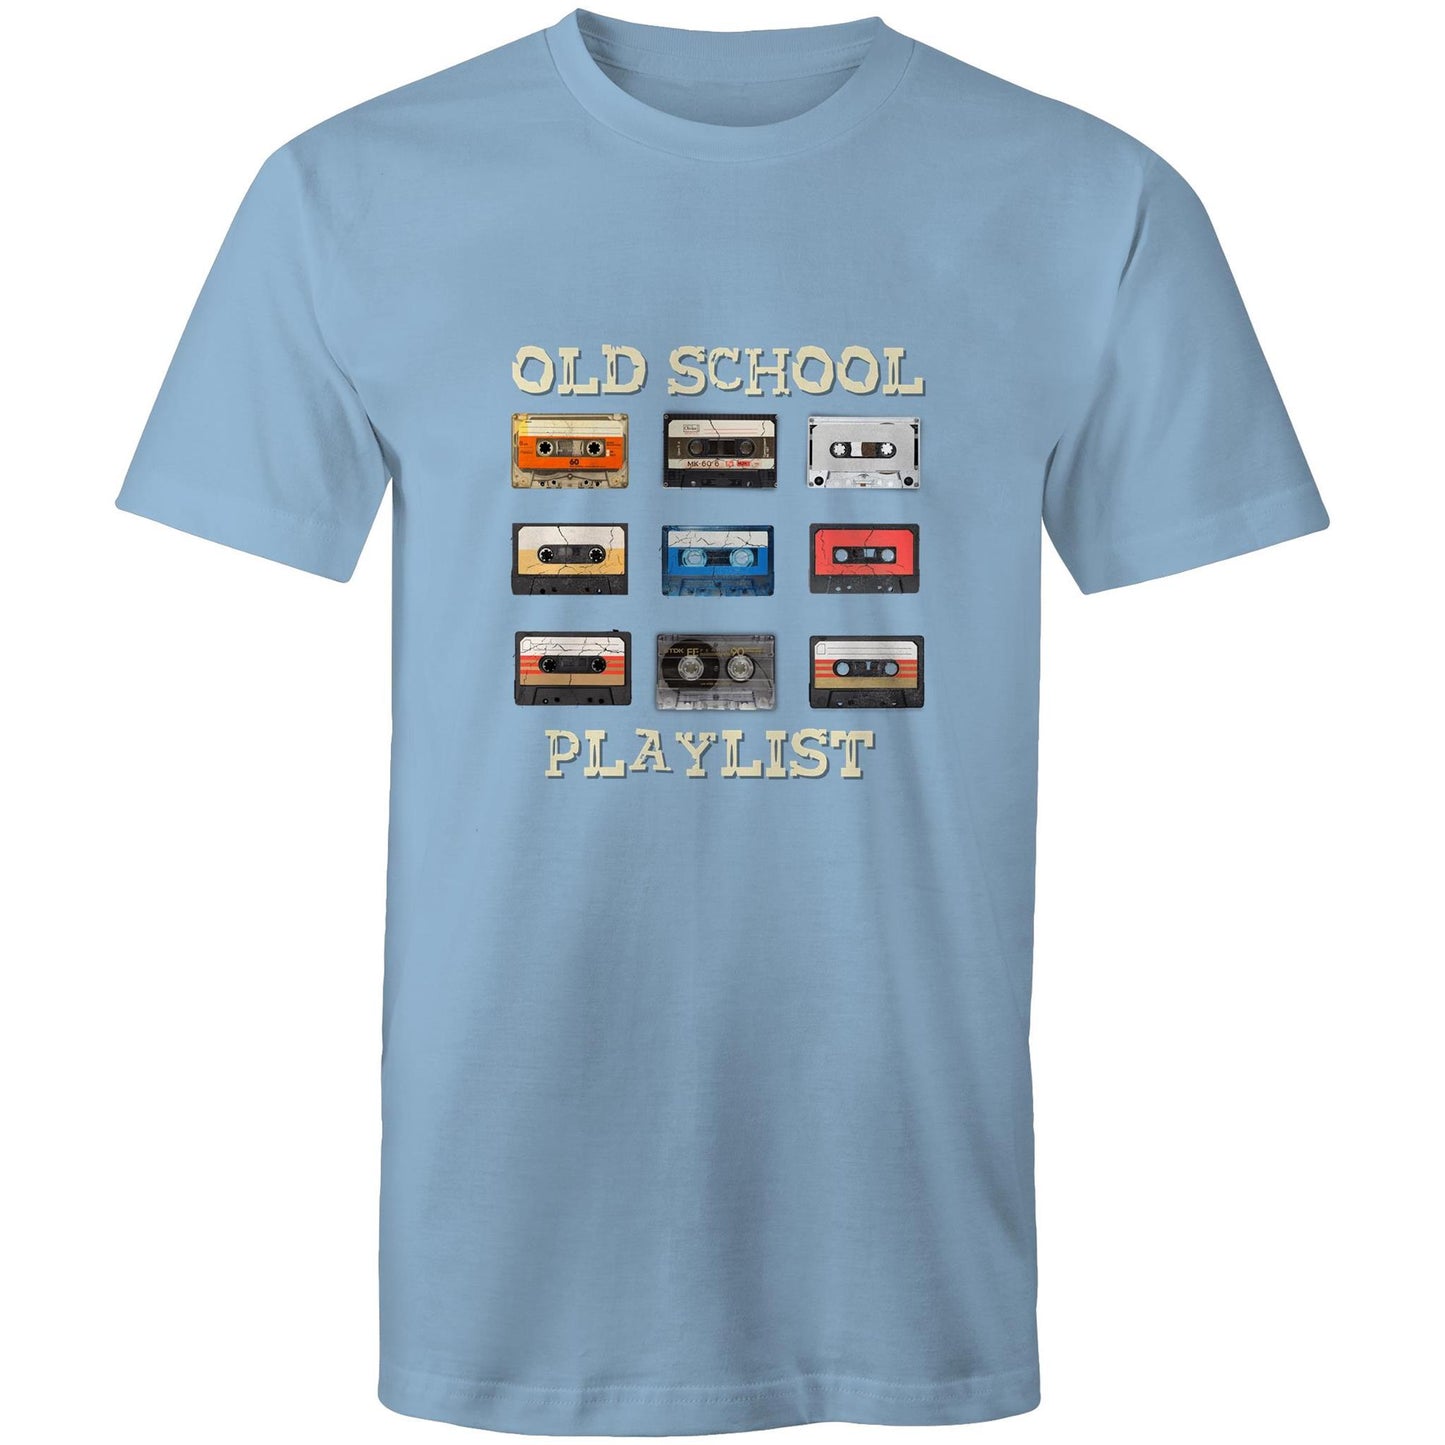 OLD SCHOOL Mens T-Shirt